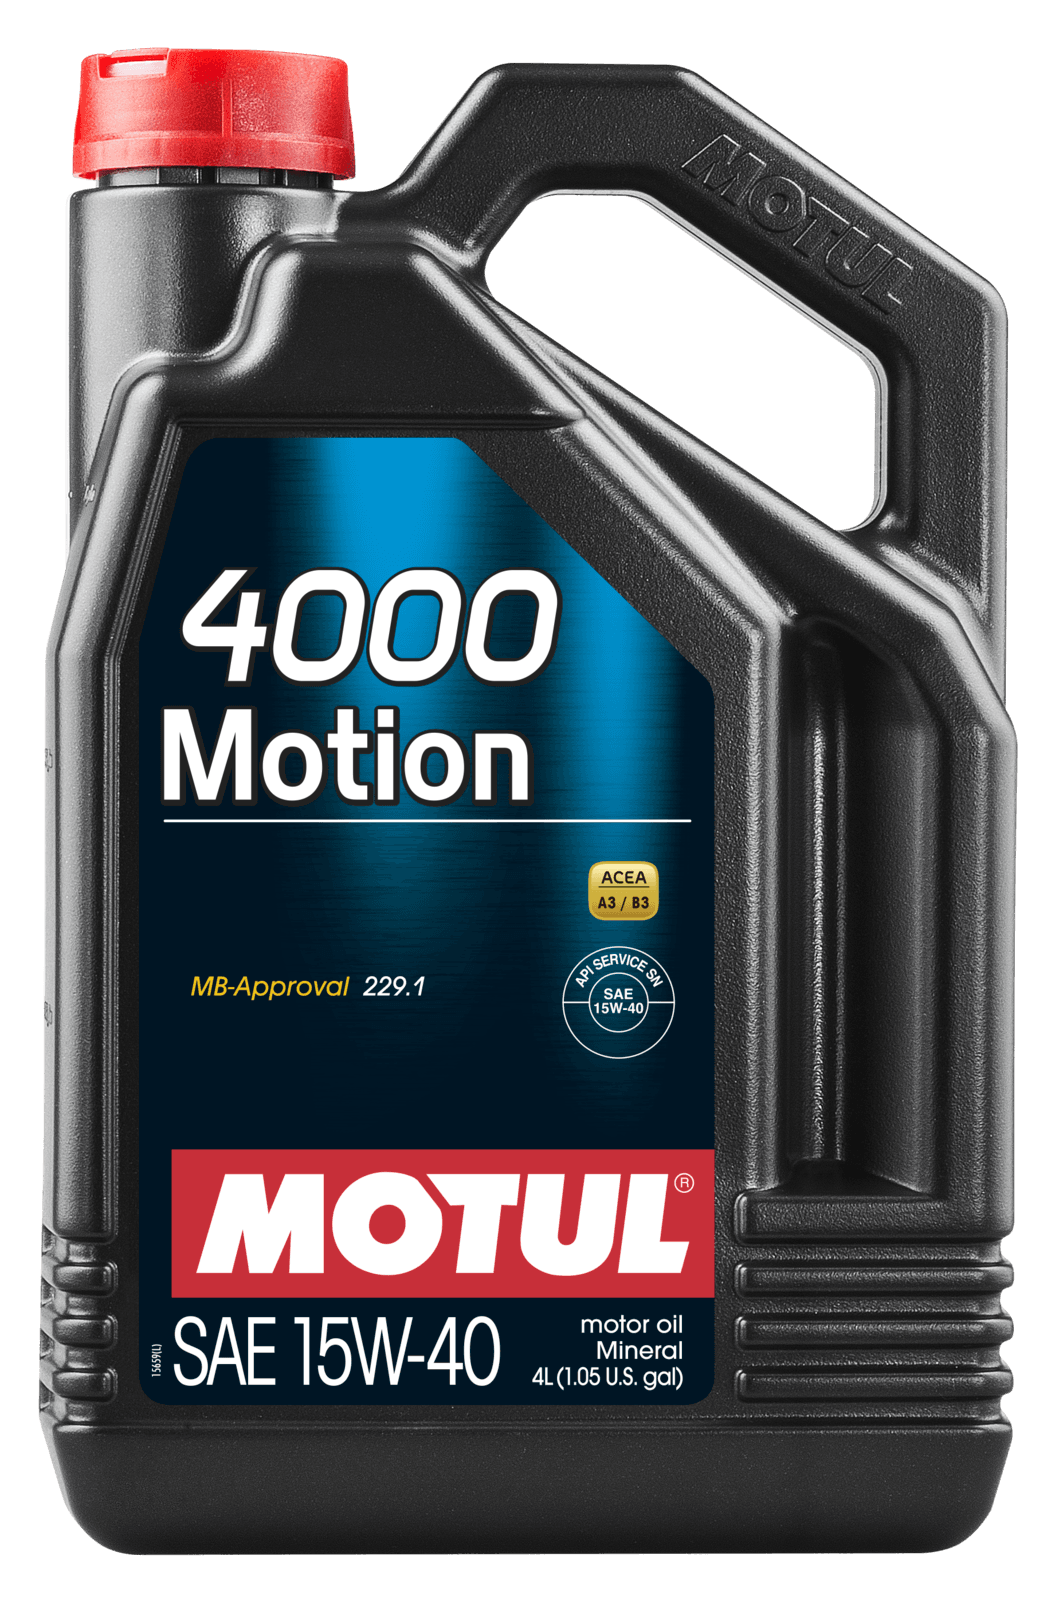 Motorový olej 15W-40 MOTUL 4000 MOTION - 4L